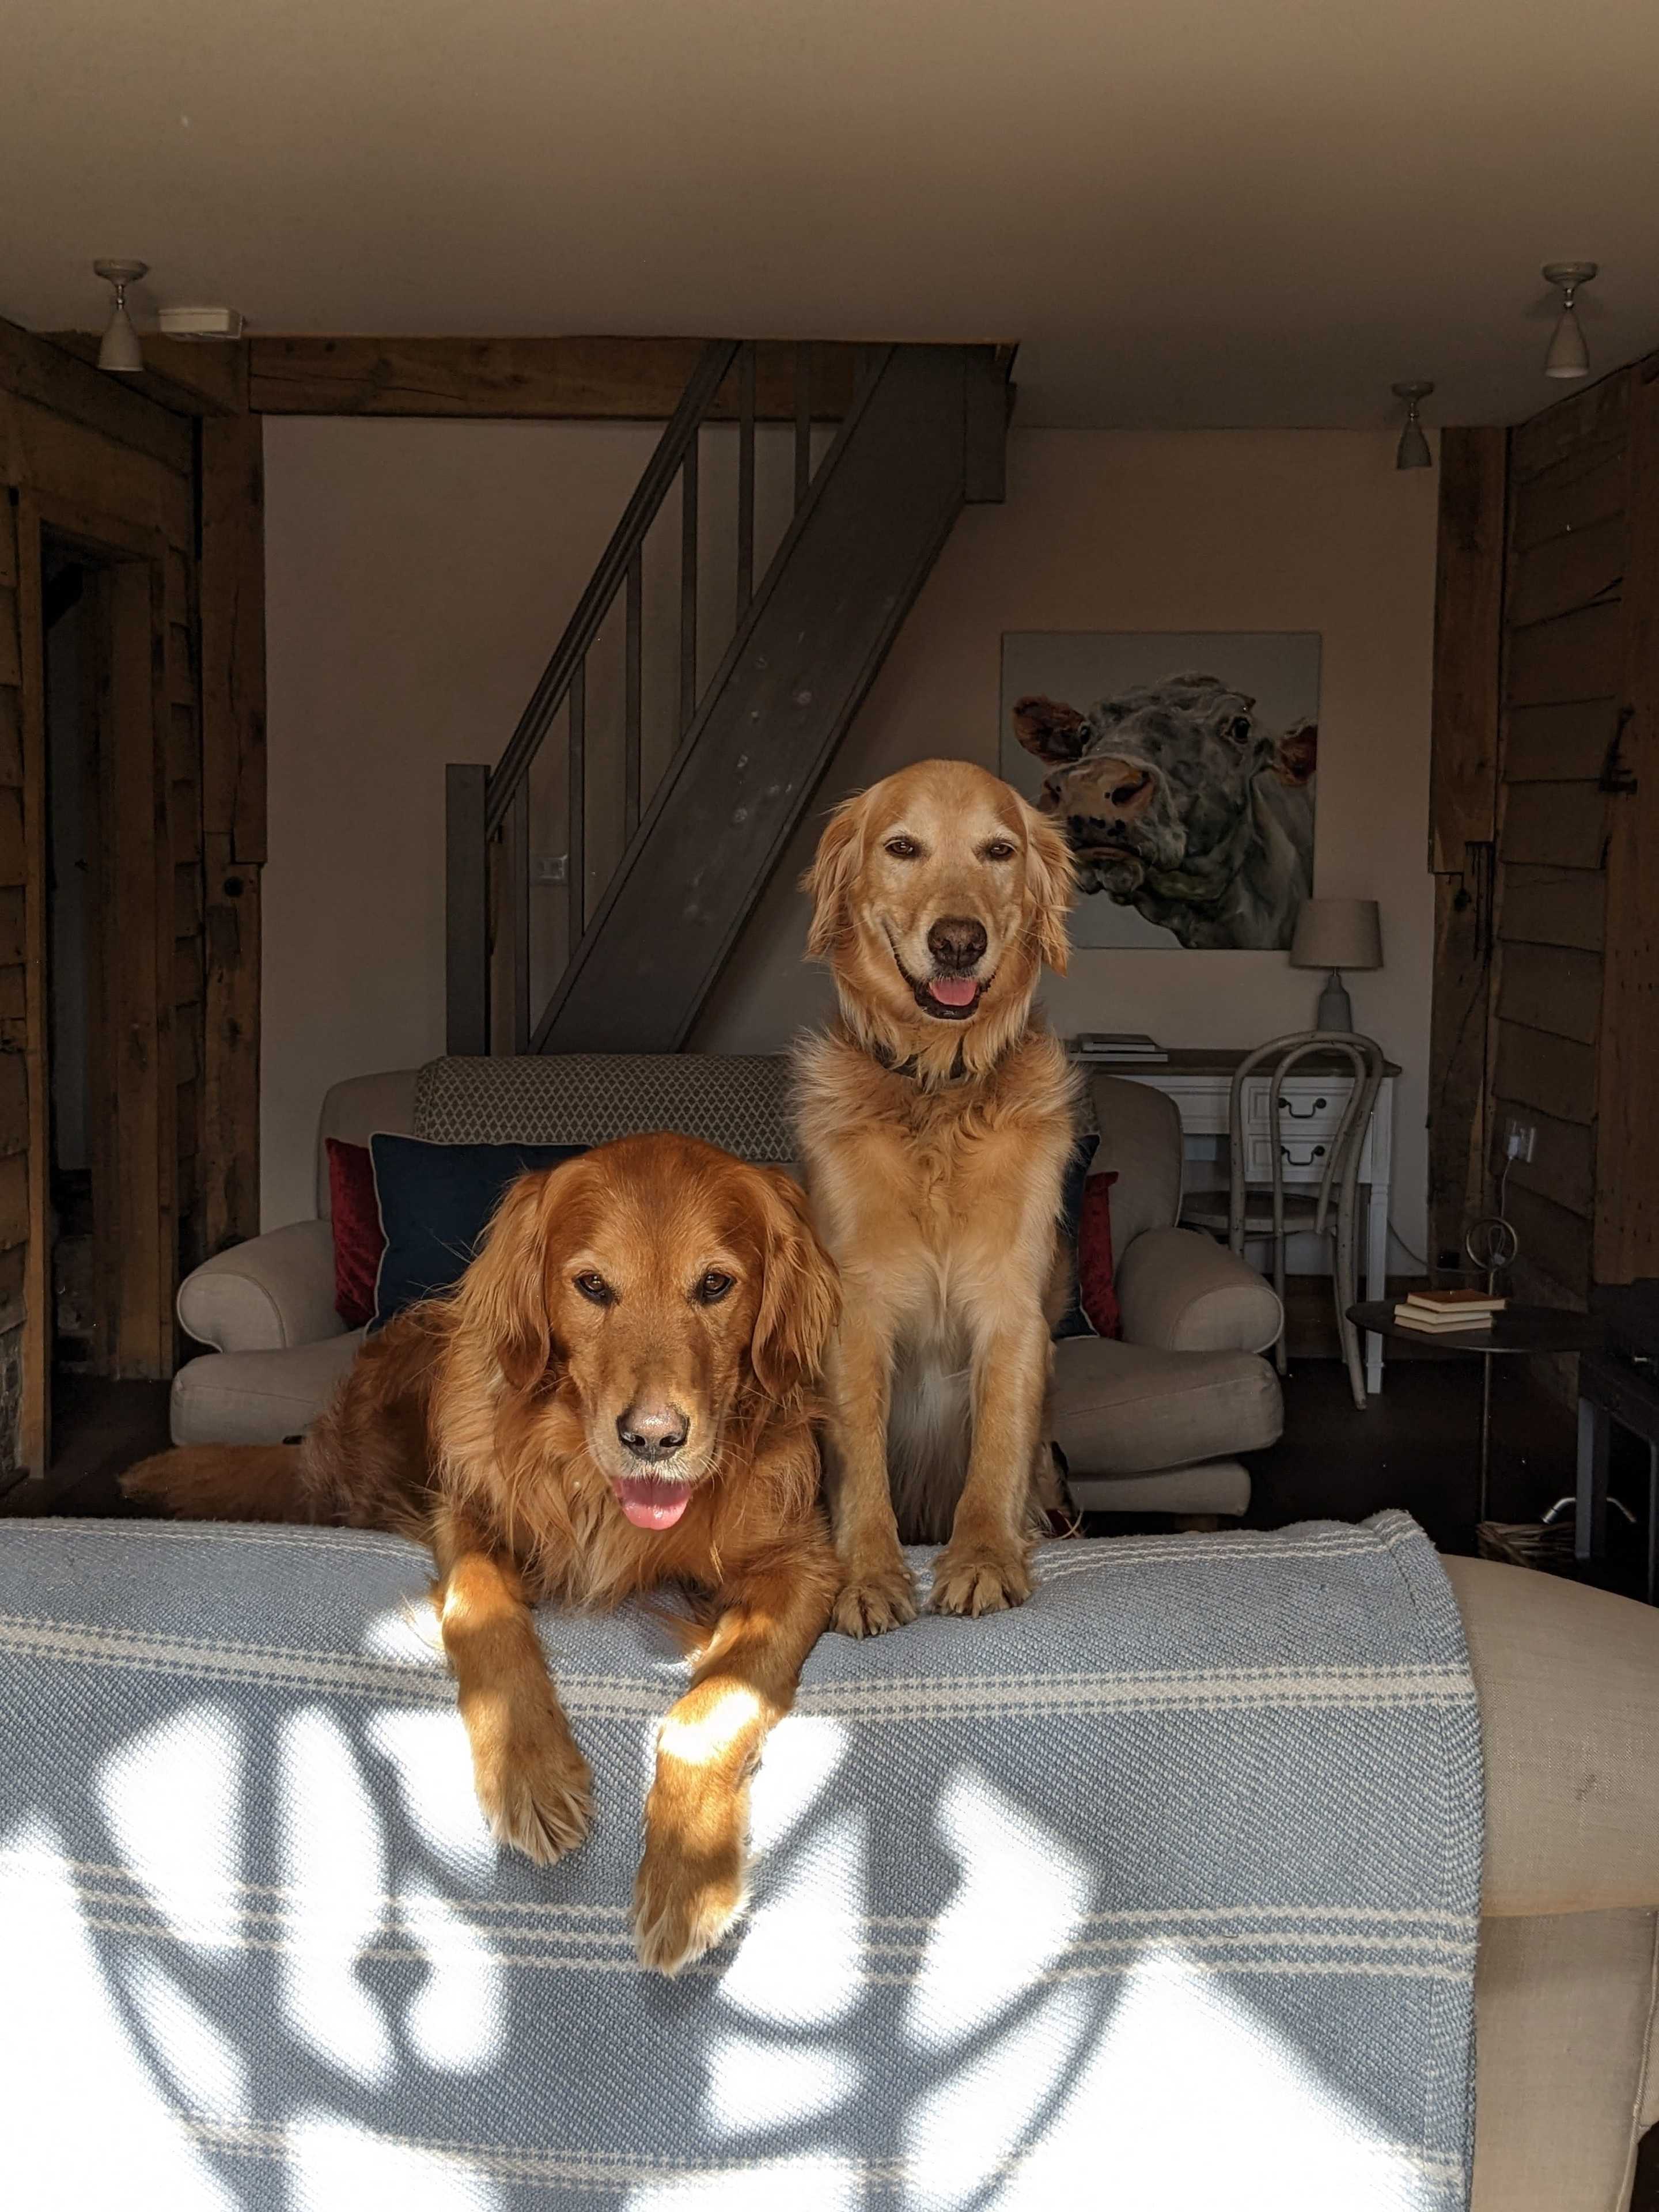 Retreat East Dog Christmas Gift Guide Dogfriendly breaks UK Retreat